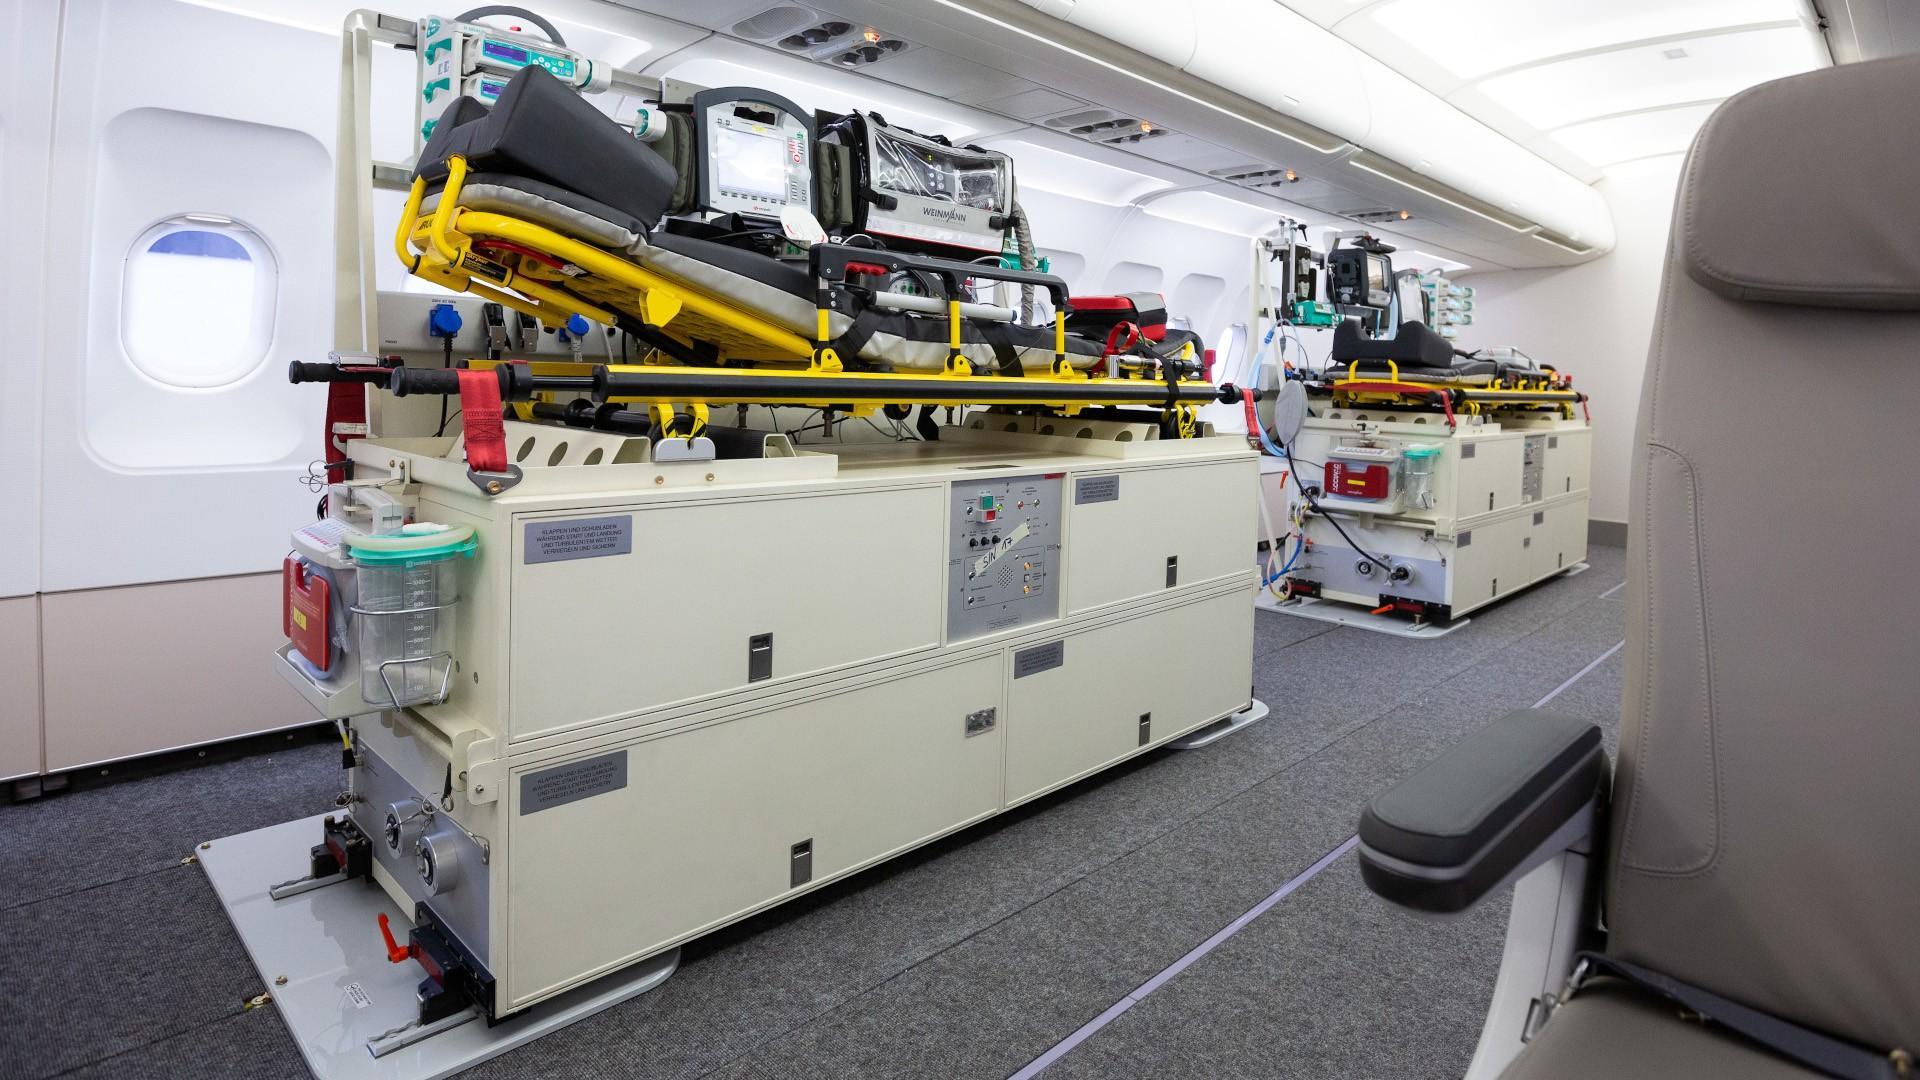 Lufthansa Technik to Develop Onboard Patient Transport Units